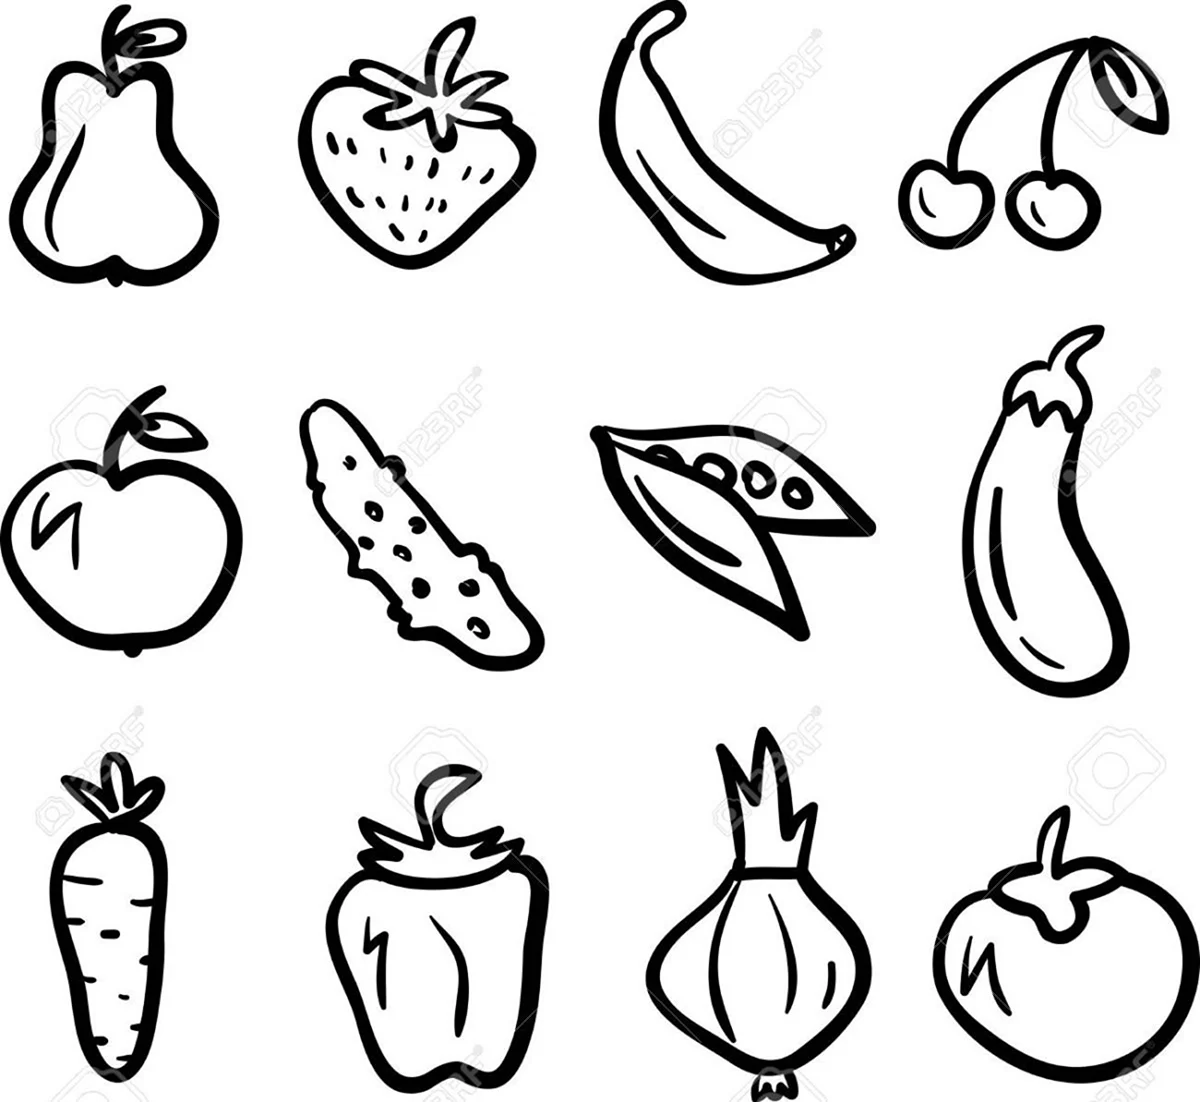 Рисунки для срисовки овощи. Для срисовки